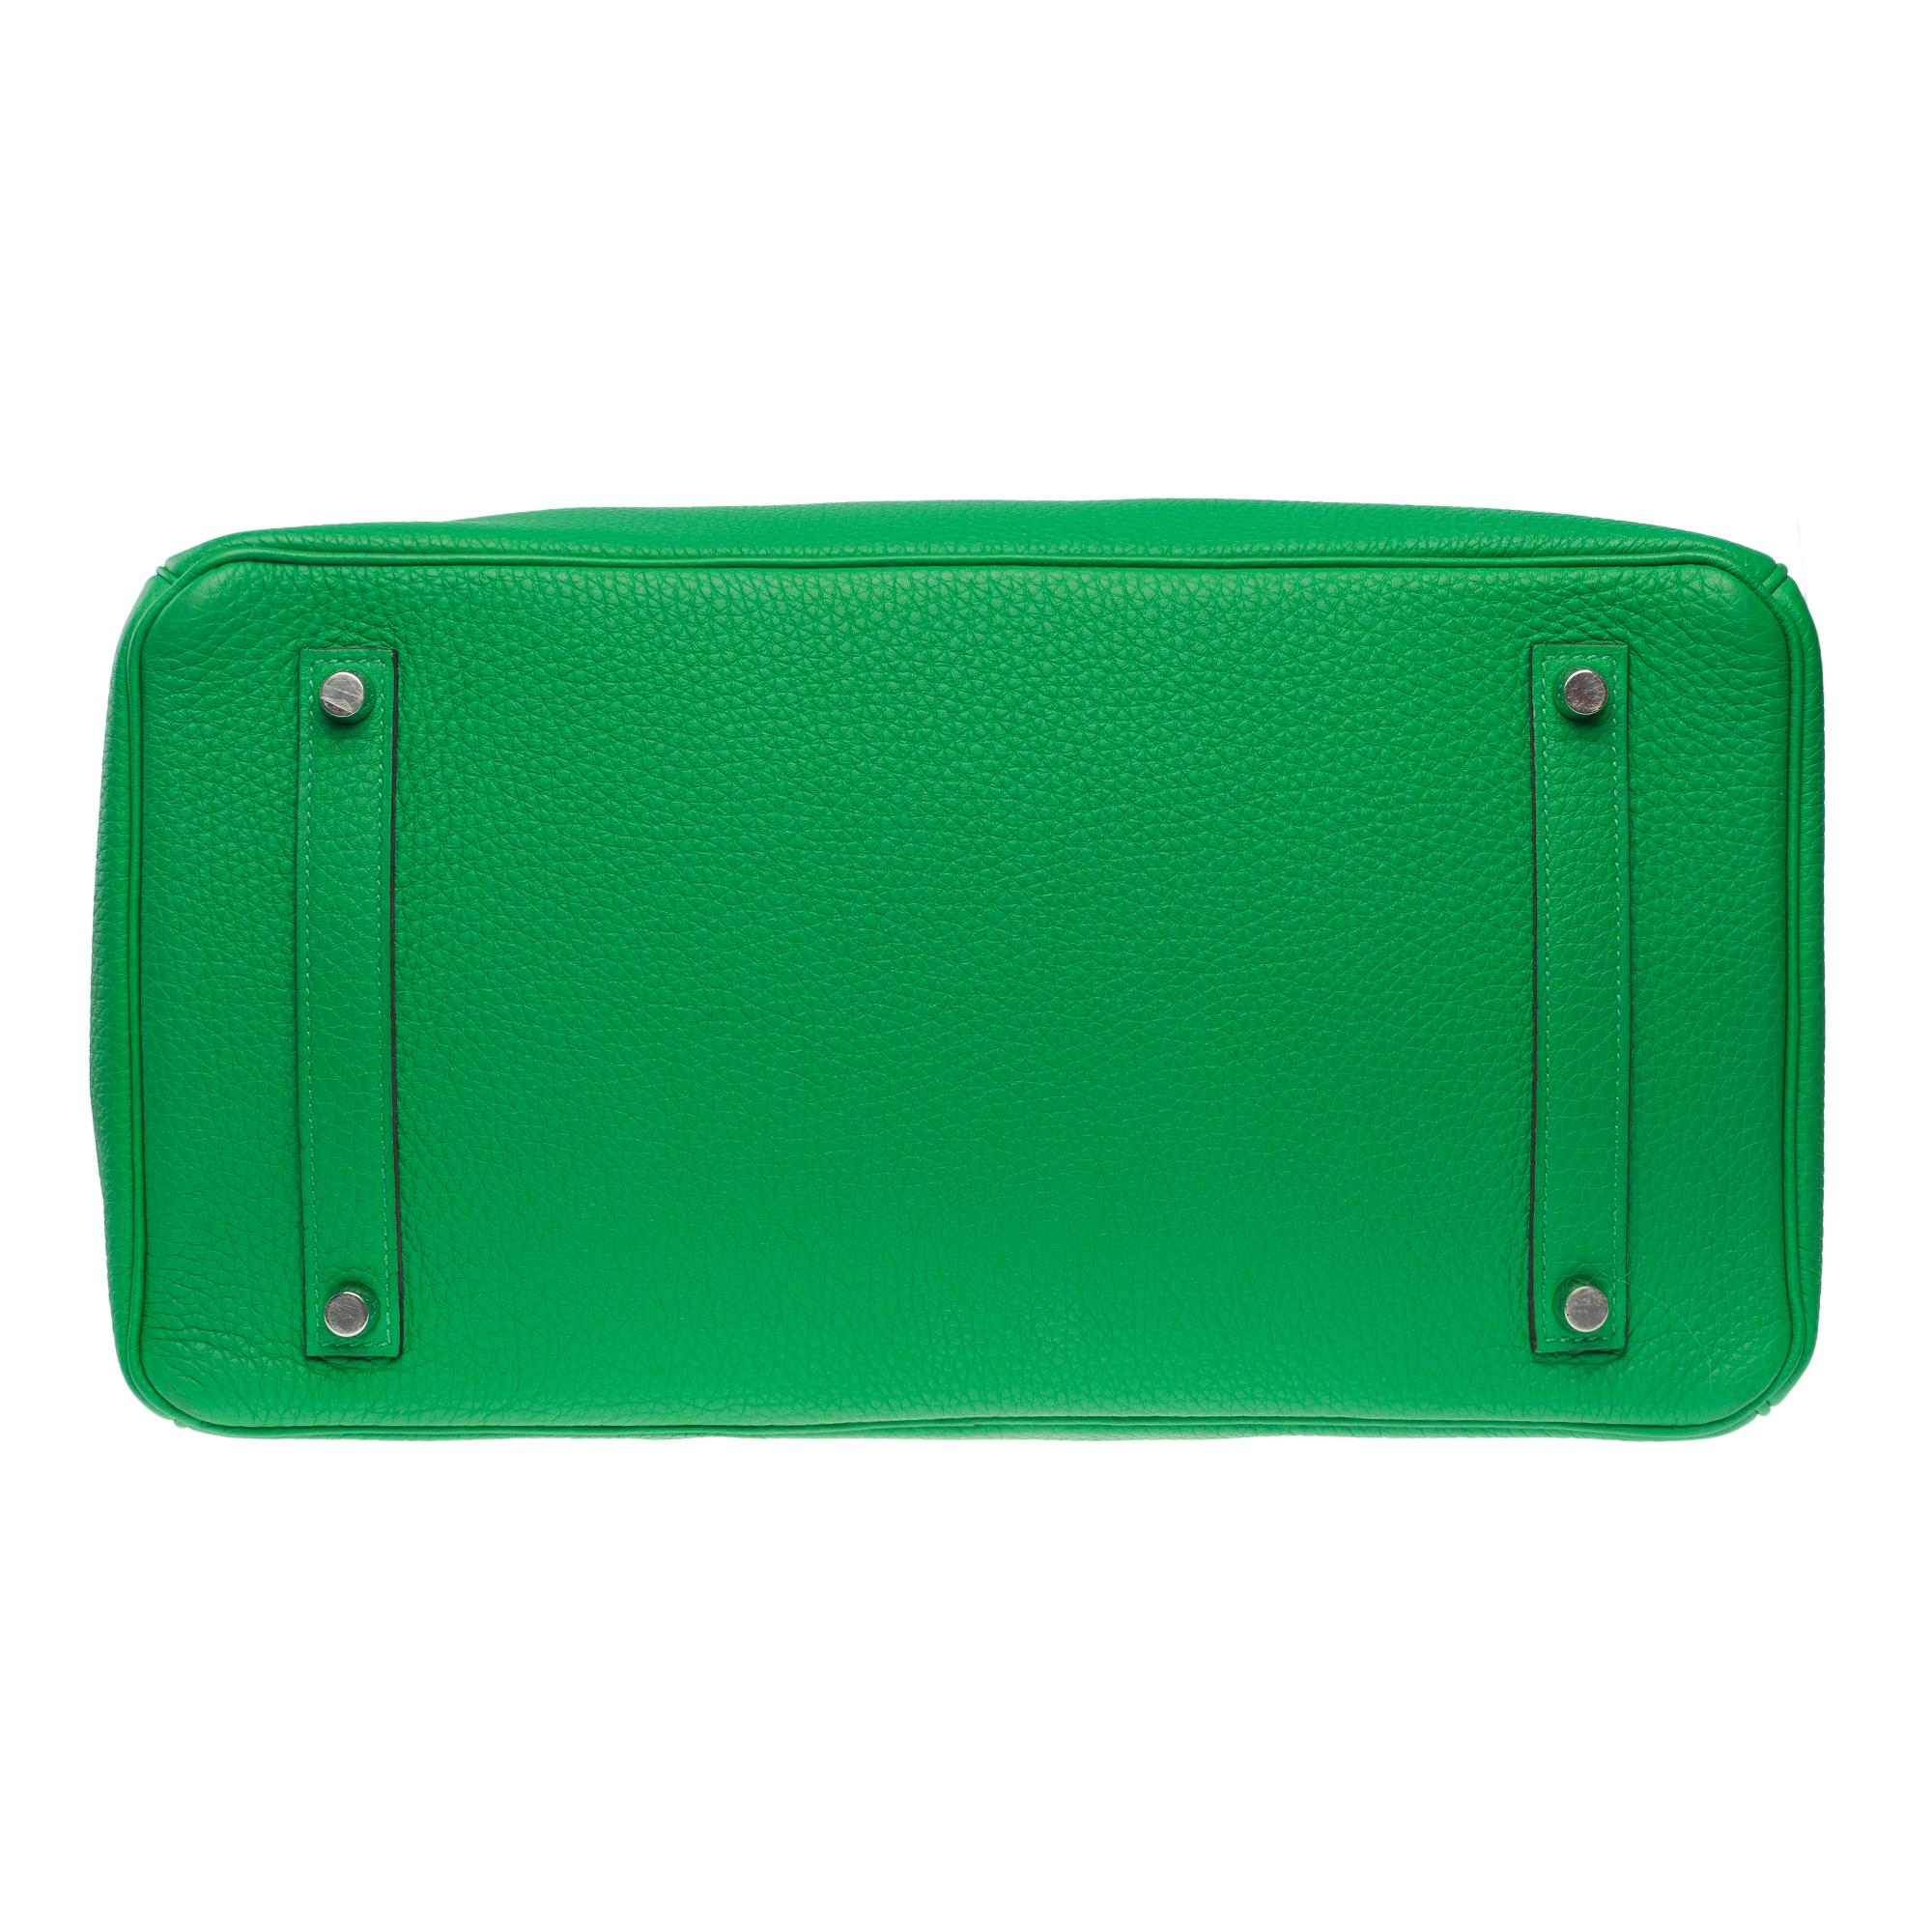 Fantastic Hermès Birkin 35 handbag in Green Bamboo Togo leather, SHW For Sale 8